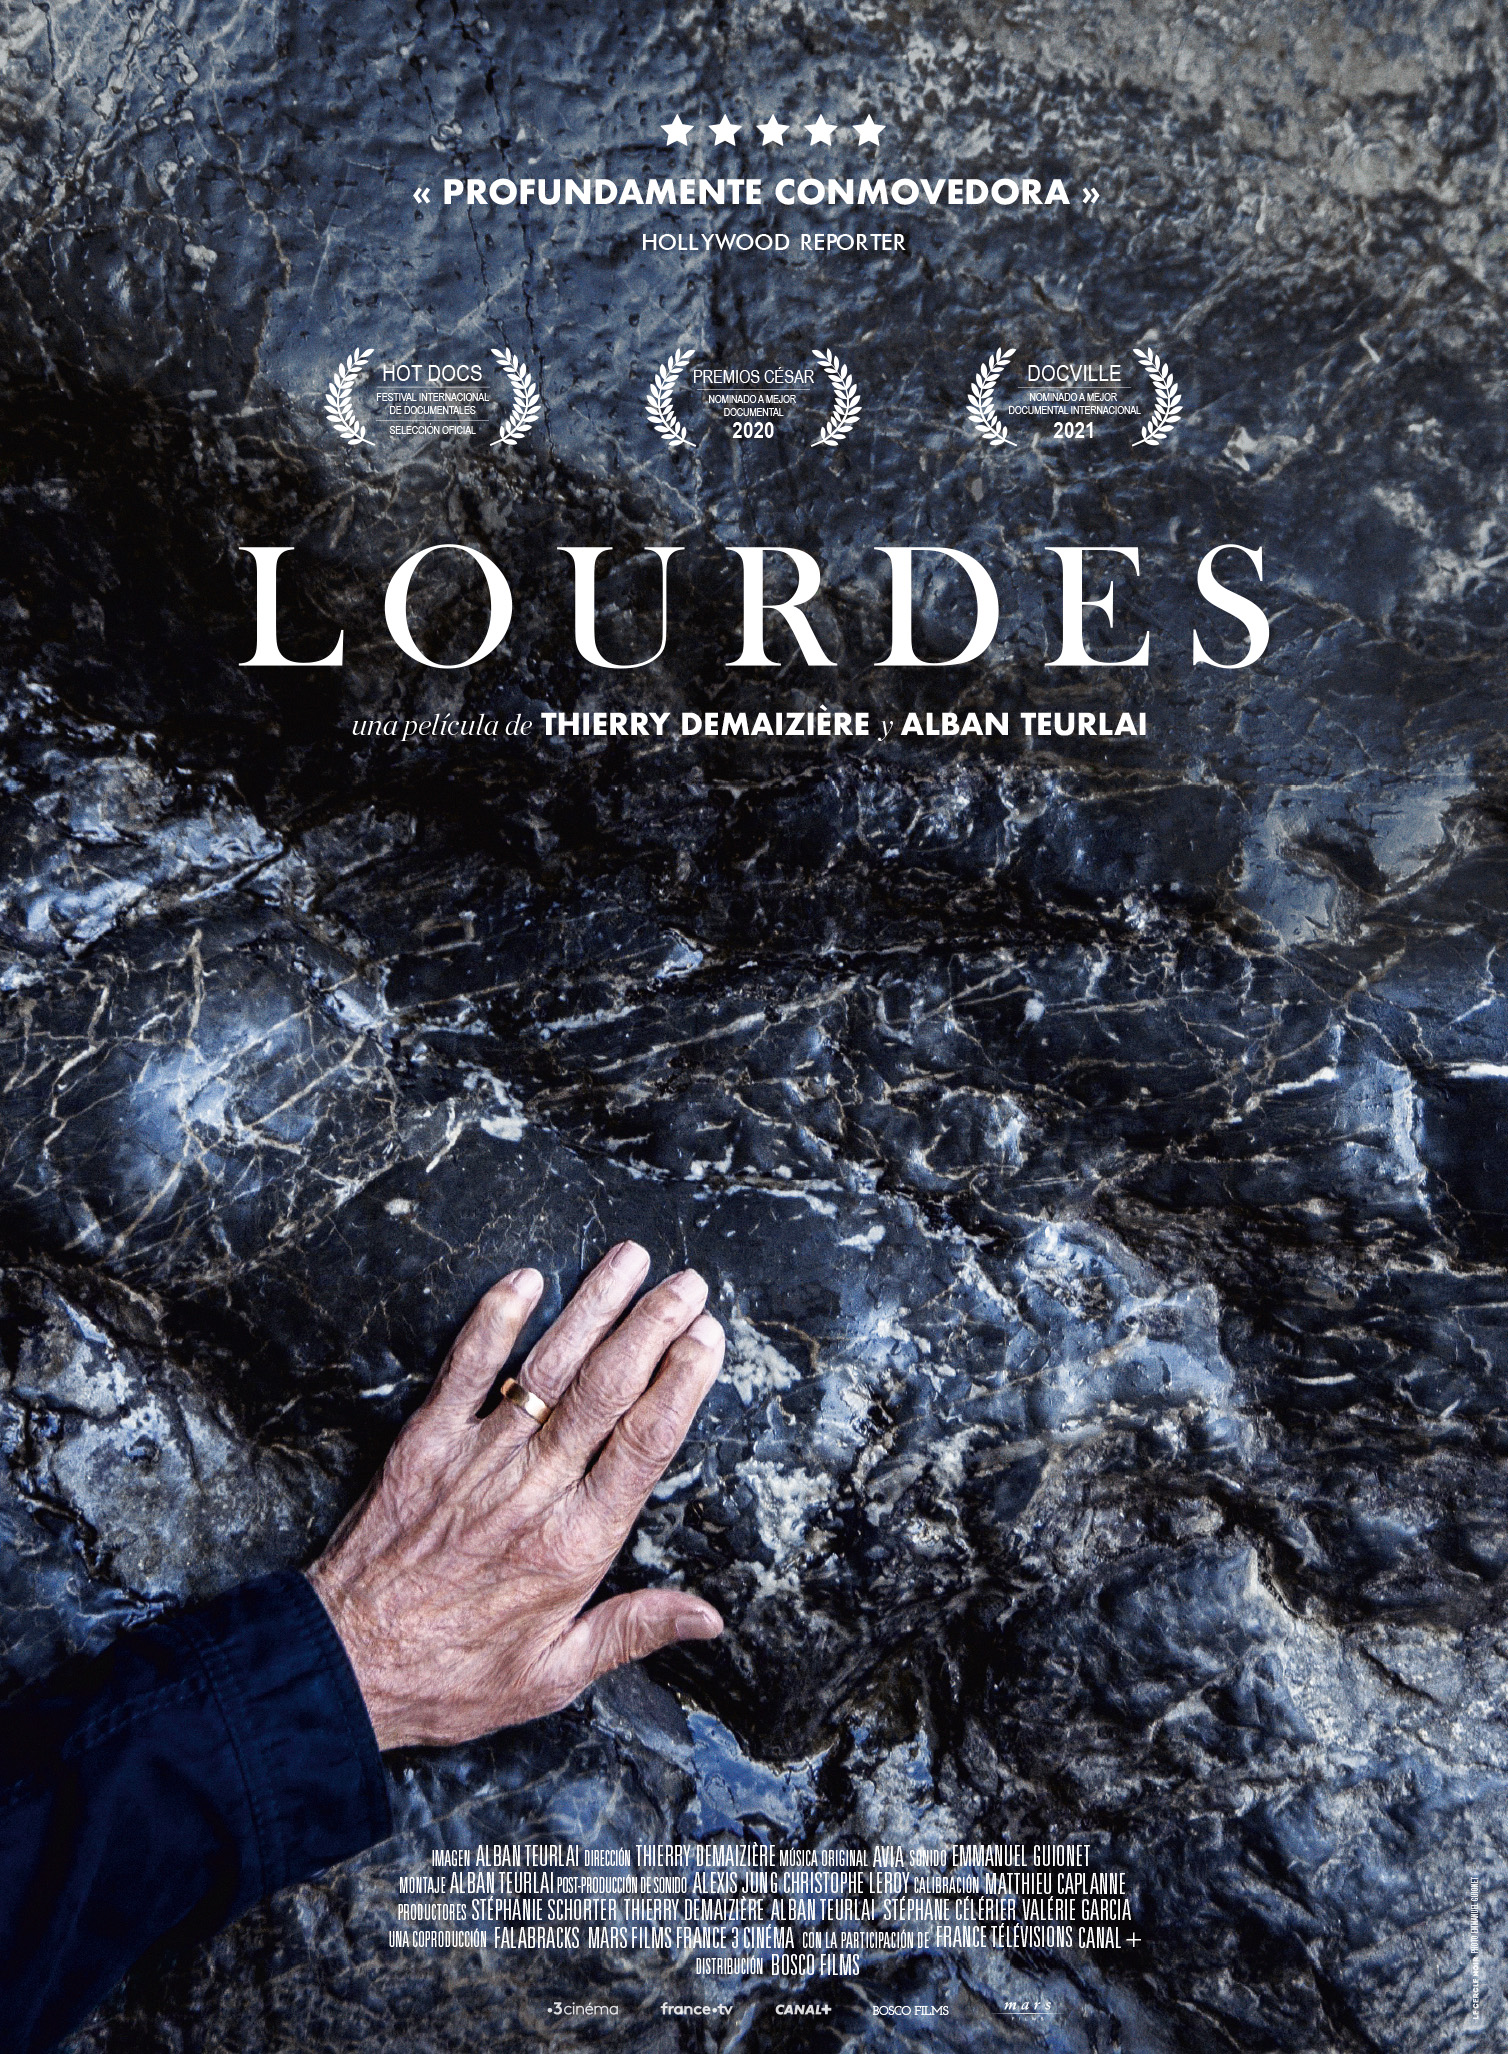 Lourdes |  A tactile spirituality